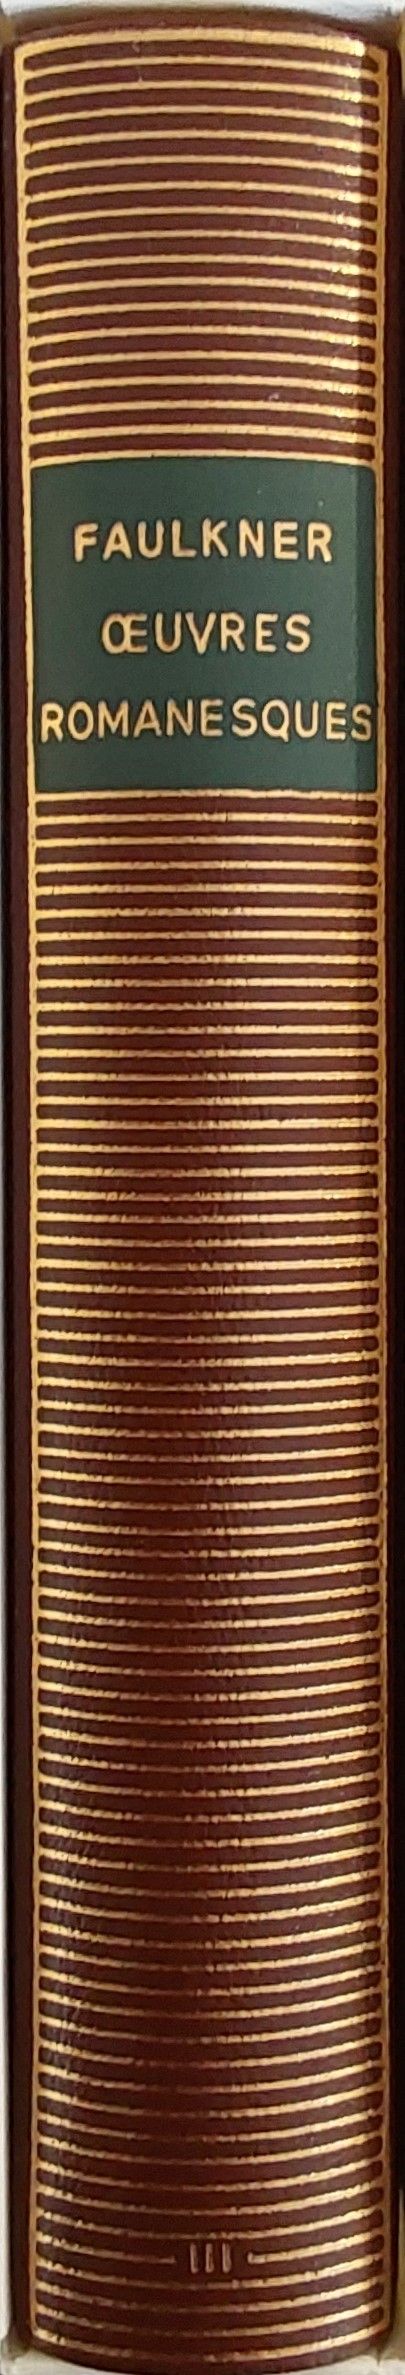 Volume 464 de Faulkner dans la Bibliothèque de la Pléiade